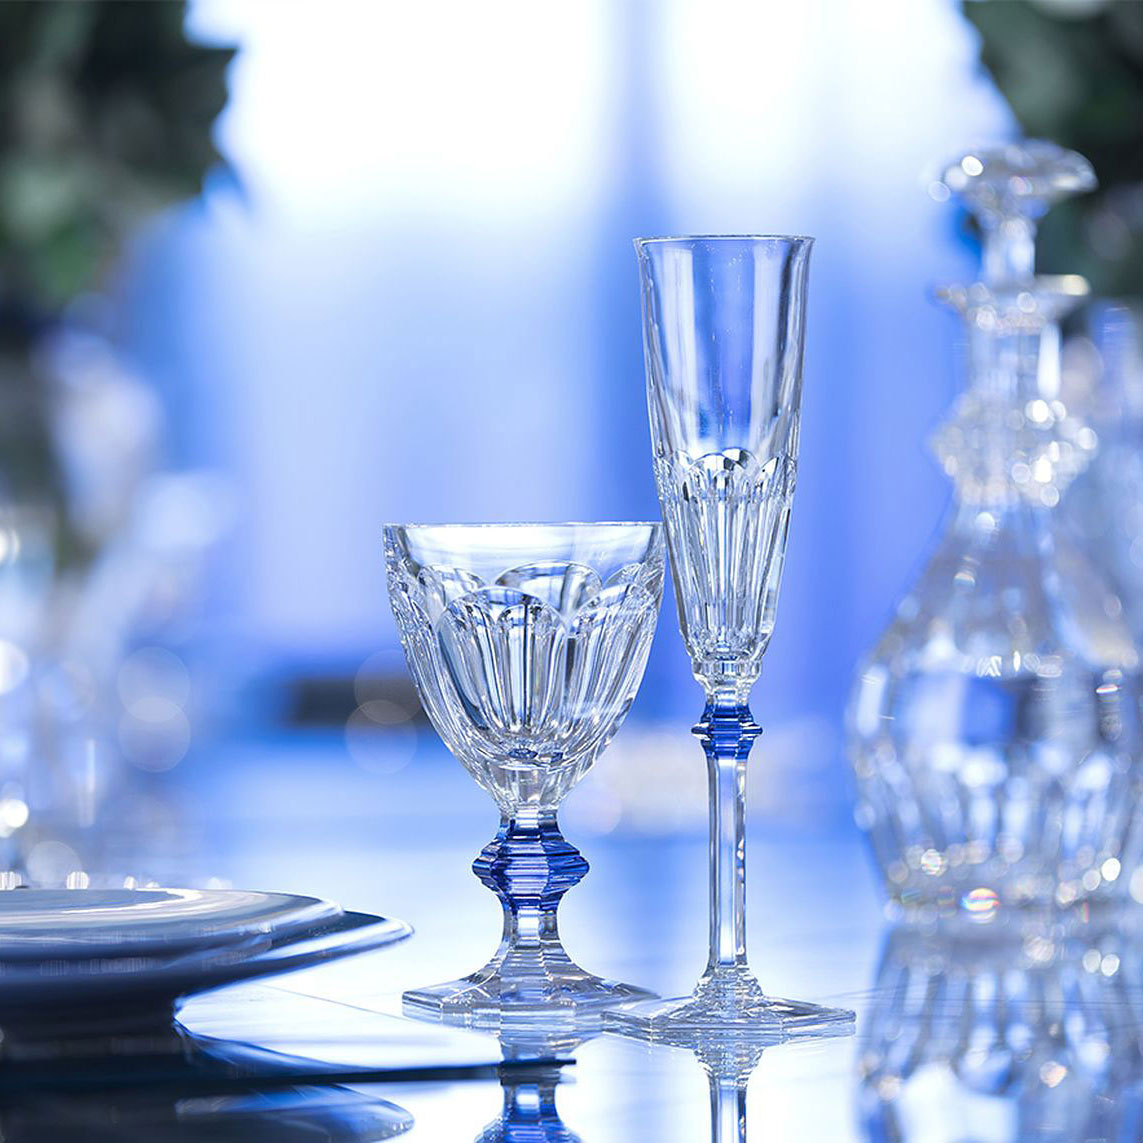 Baccarat Harcourt Eve Champagne Flutes, Blue Knob, Pair